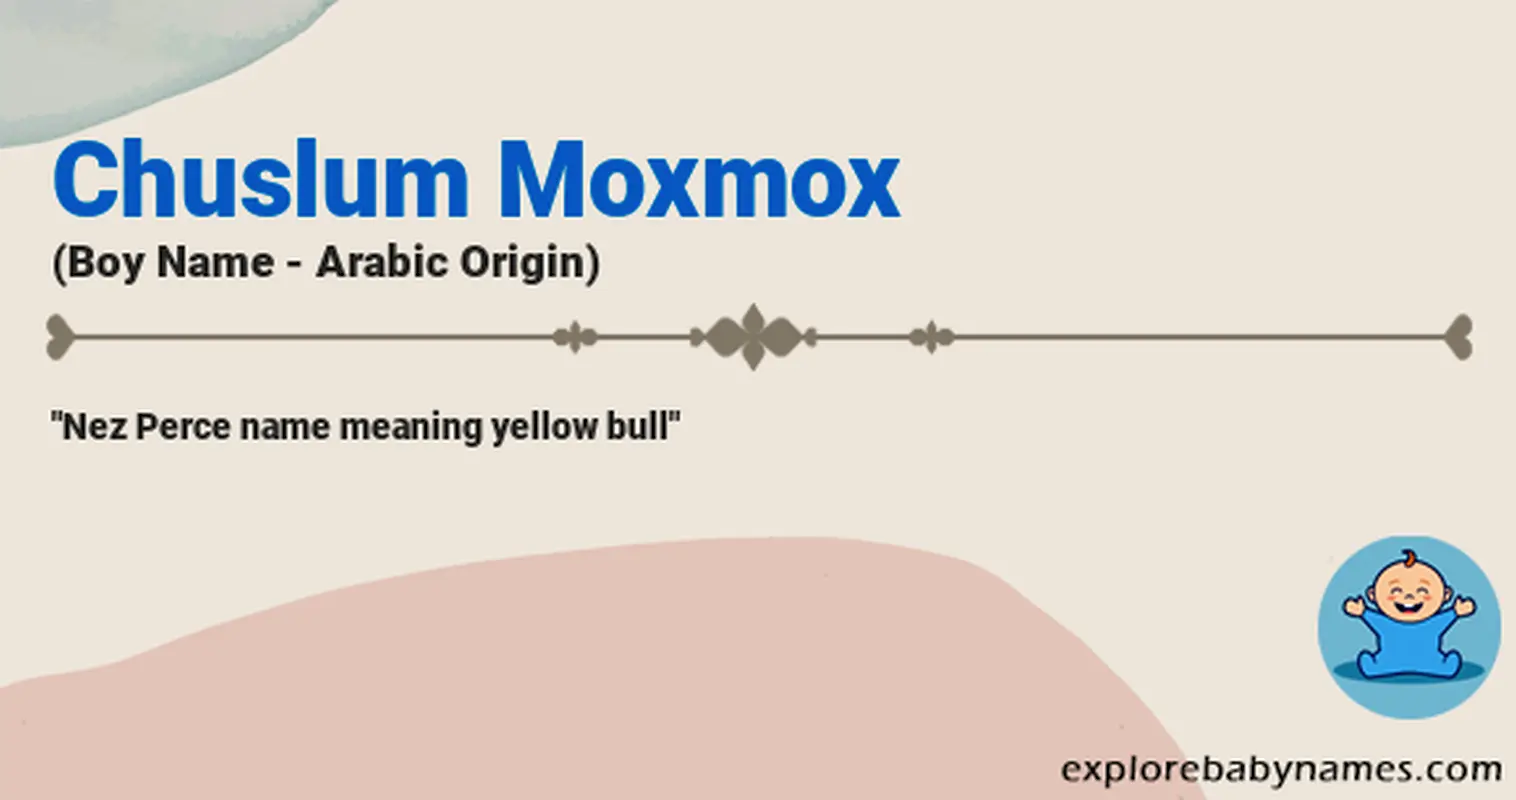 Meaning of Chuslum Moxmox